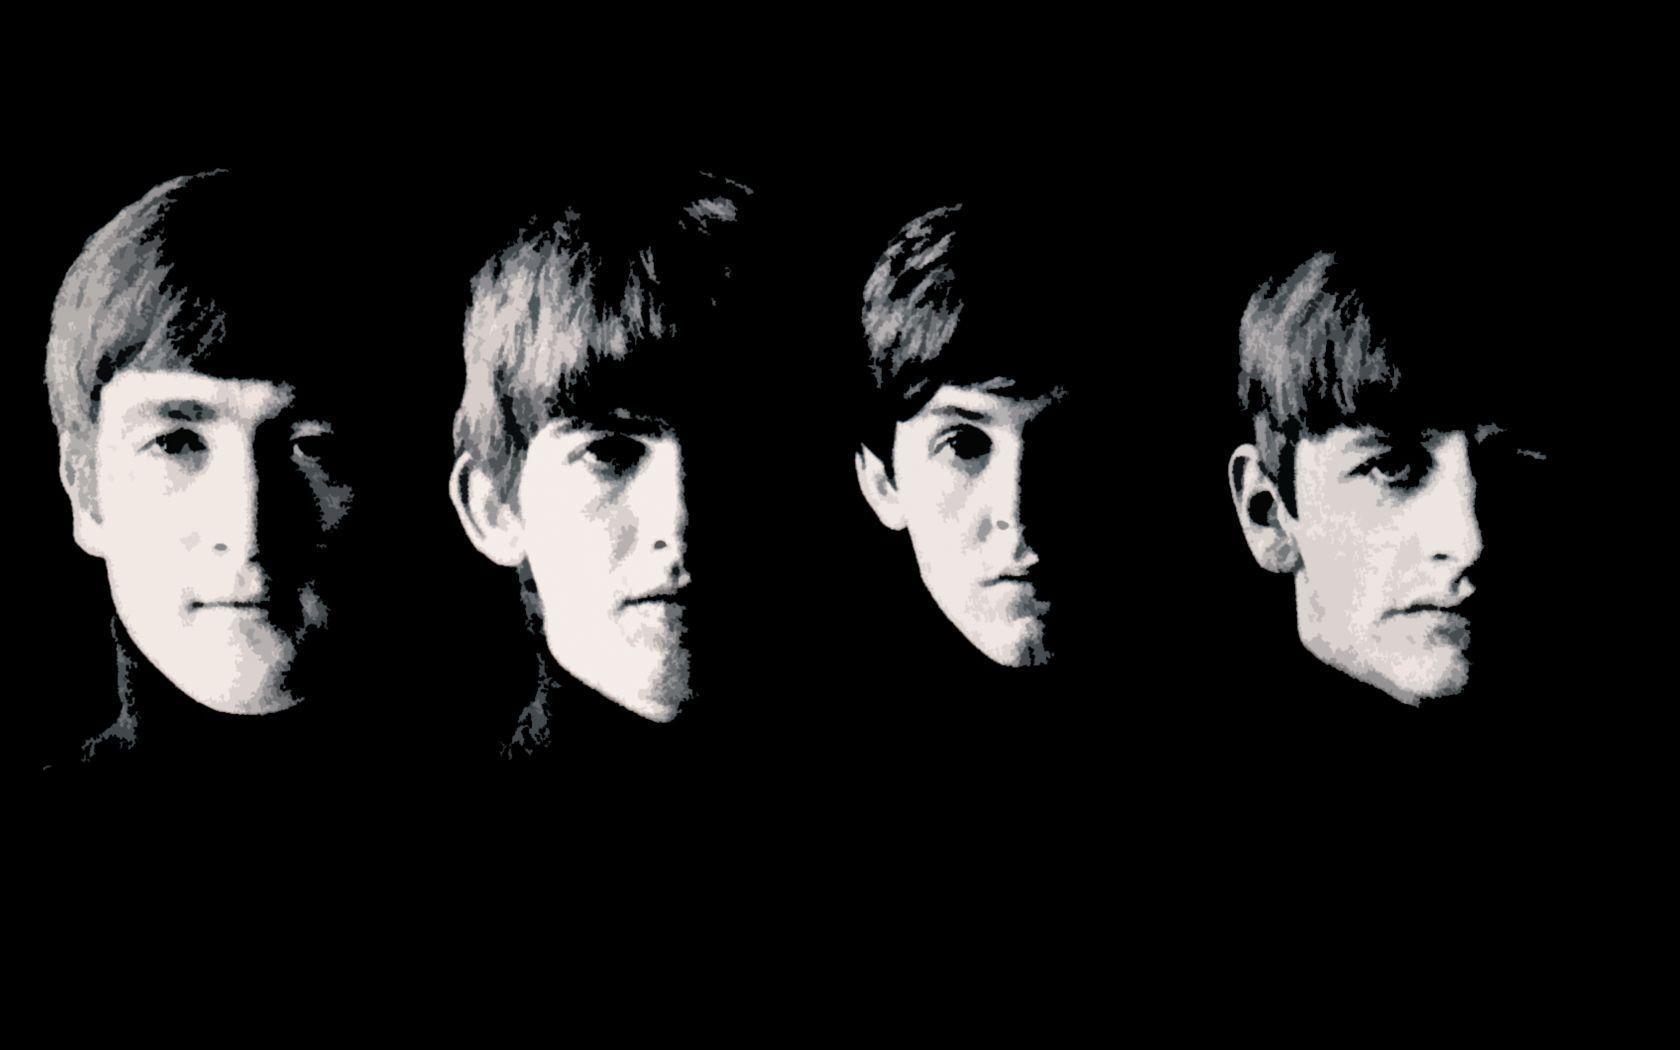 Best 15 The Beatles Wallpaper